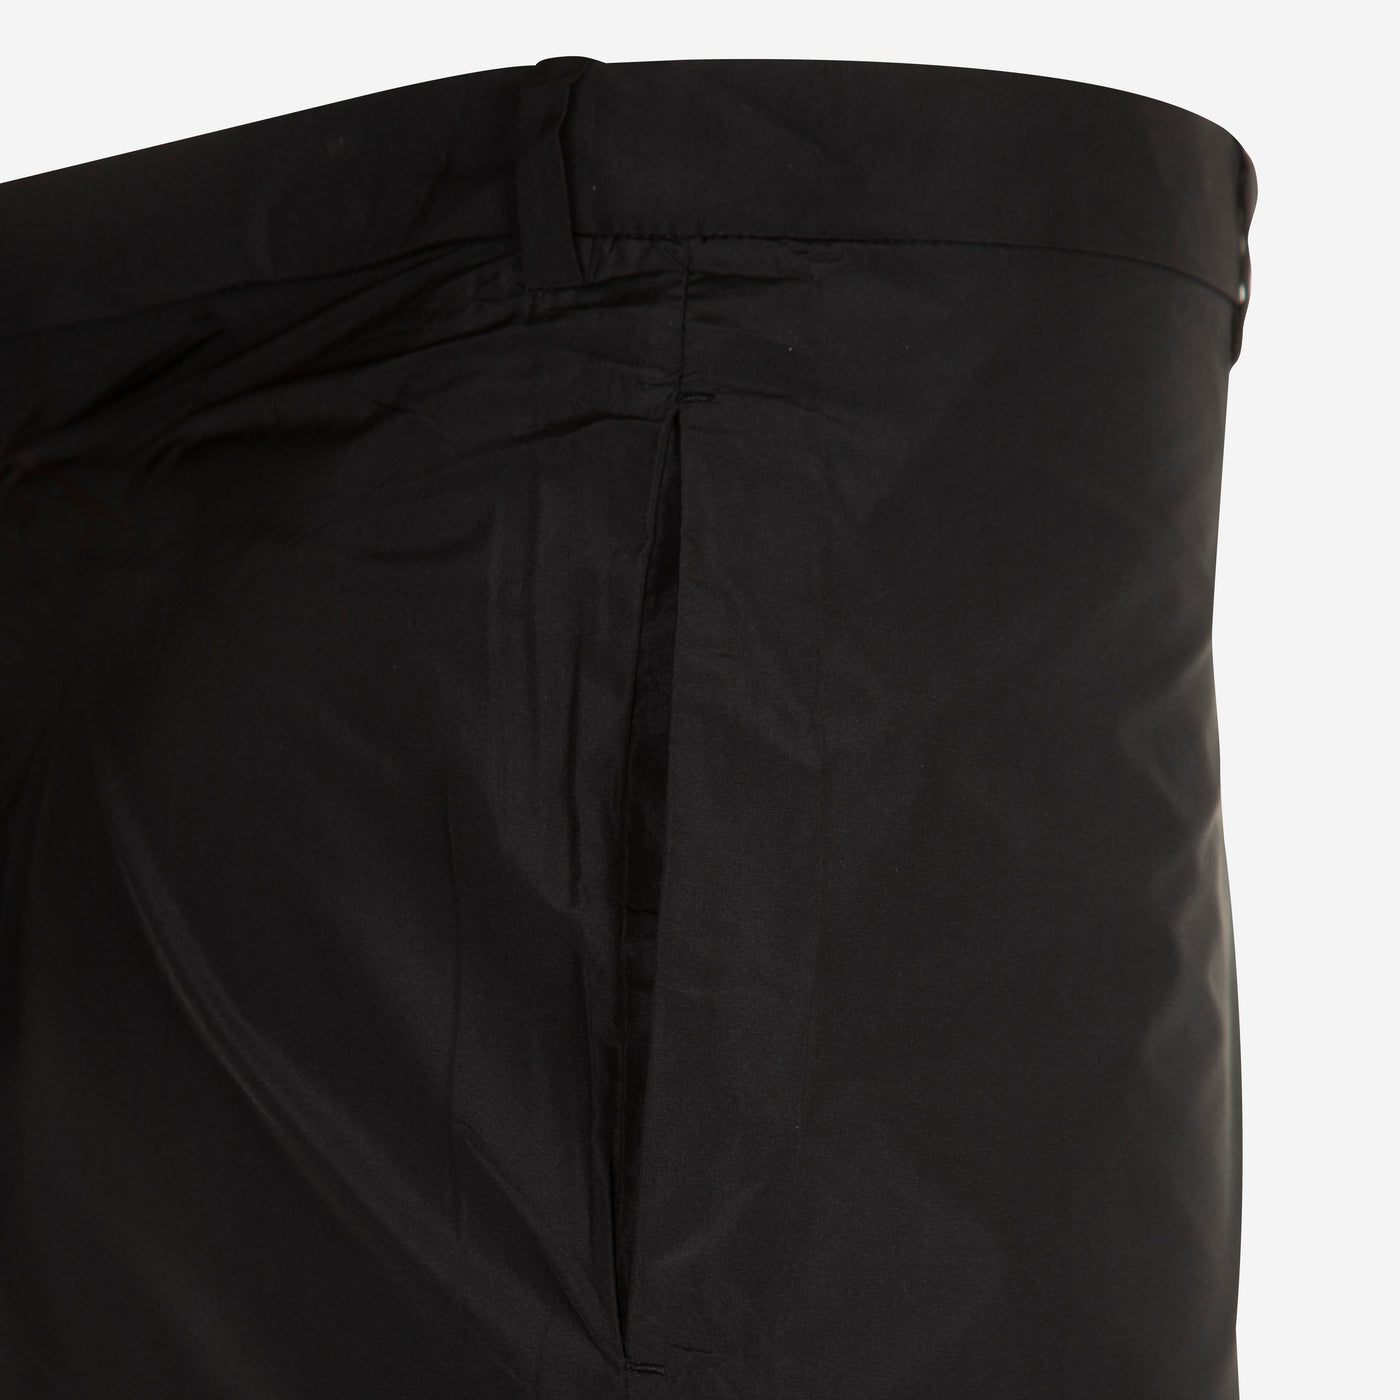 Balenciaga Packable Trousers